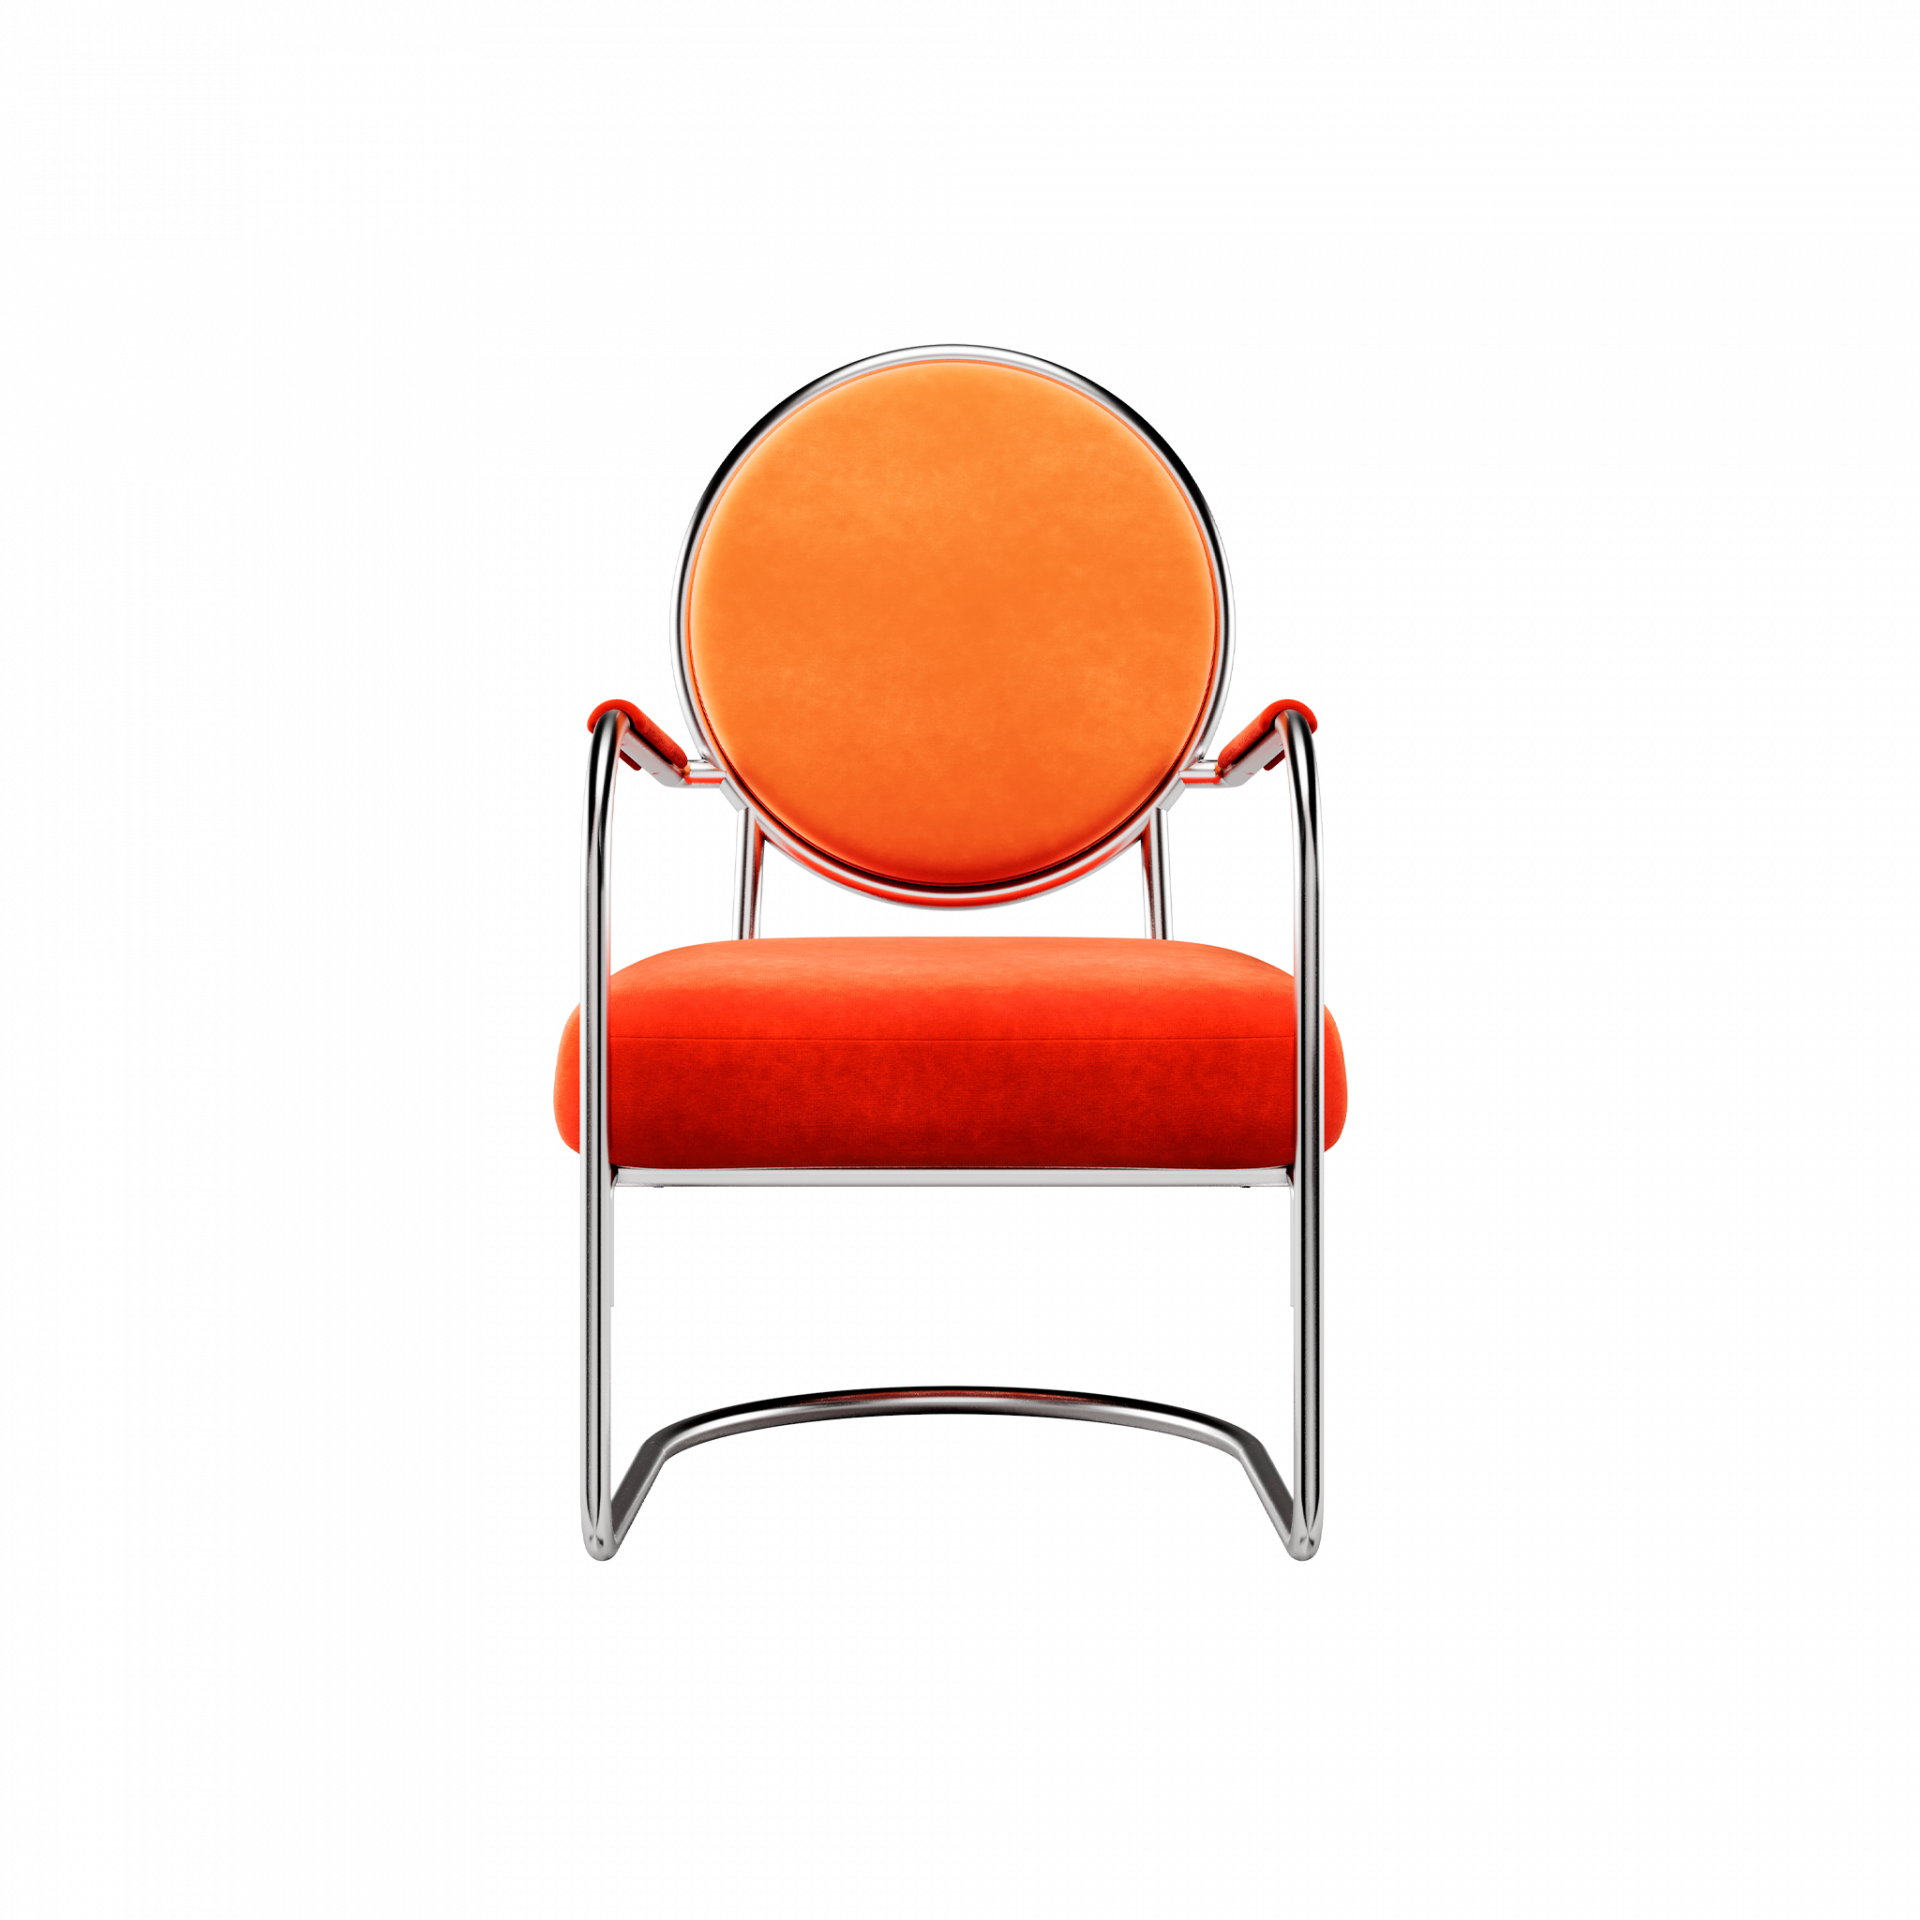 Jucca Chair Orange by HOMMÉS Studio